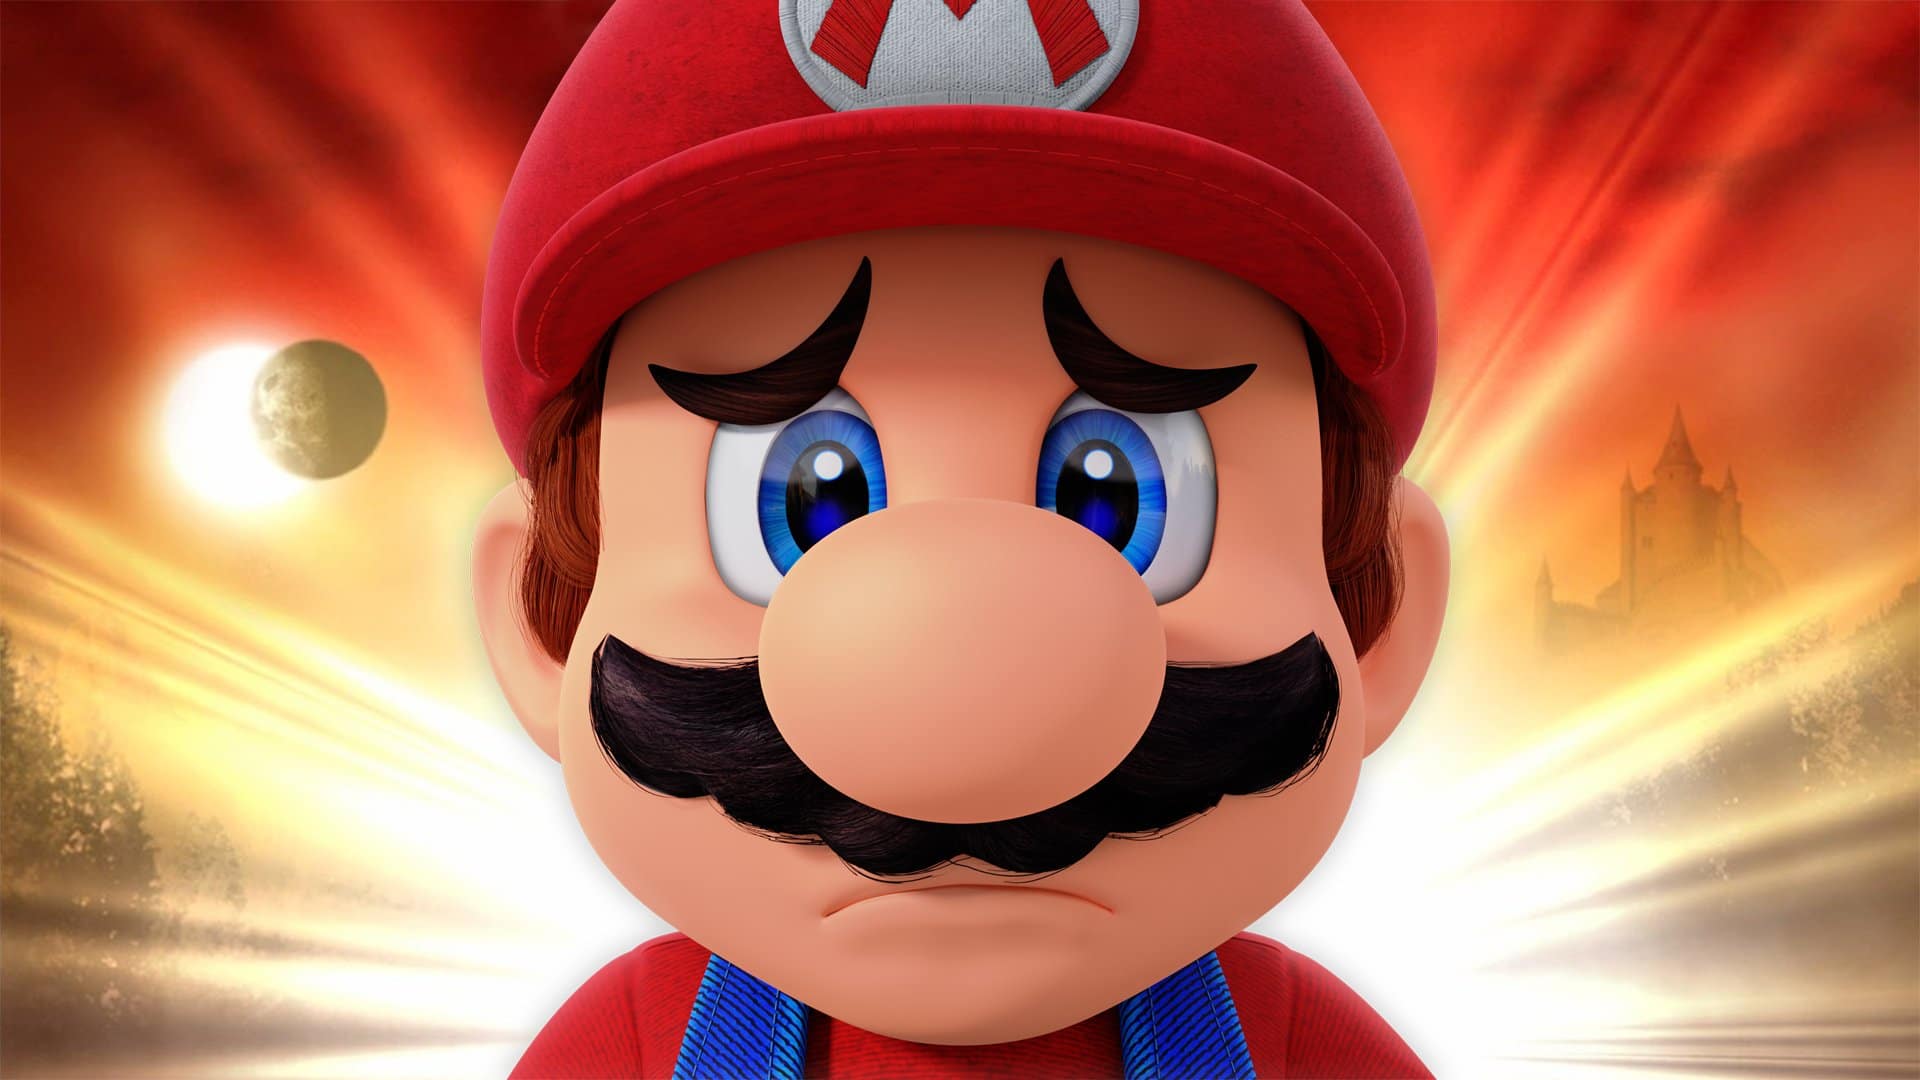 Super Mario movie postponed to Spring 2023